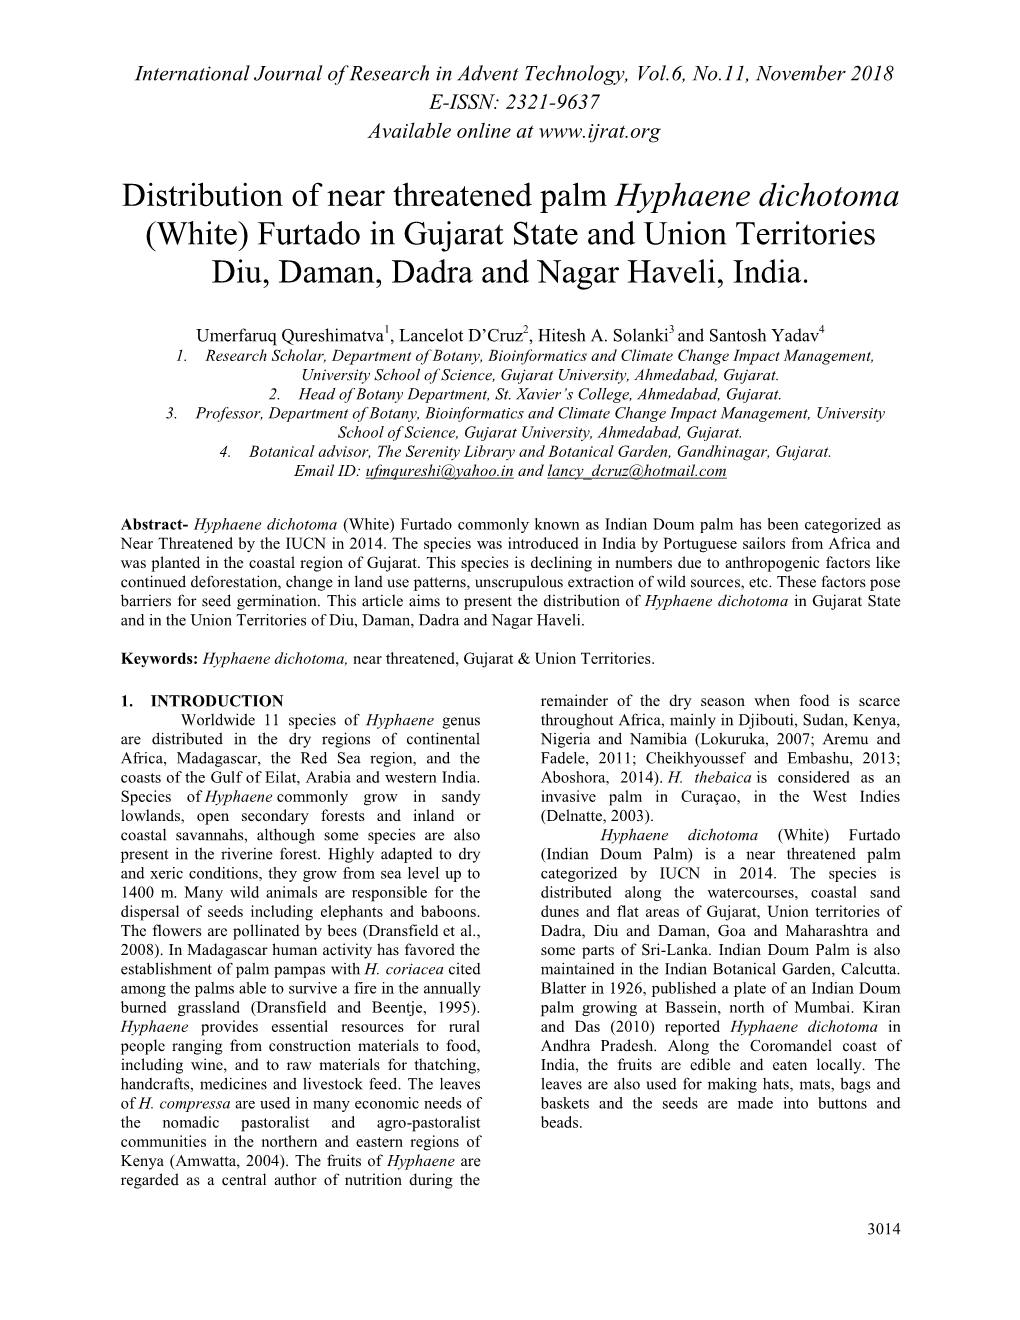 Distribution of Near Threatened Palm Hyphaene Dichotoma (White) Furtado in Gujarat State and Union Territories Diu, Daman, Dadra and Nagar Haveli, India